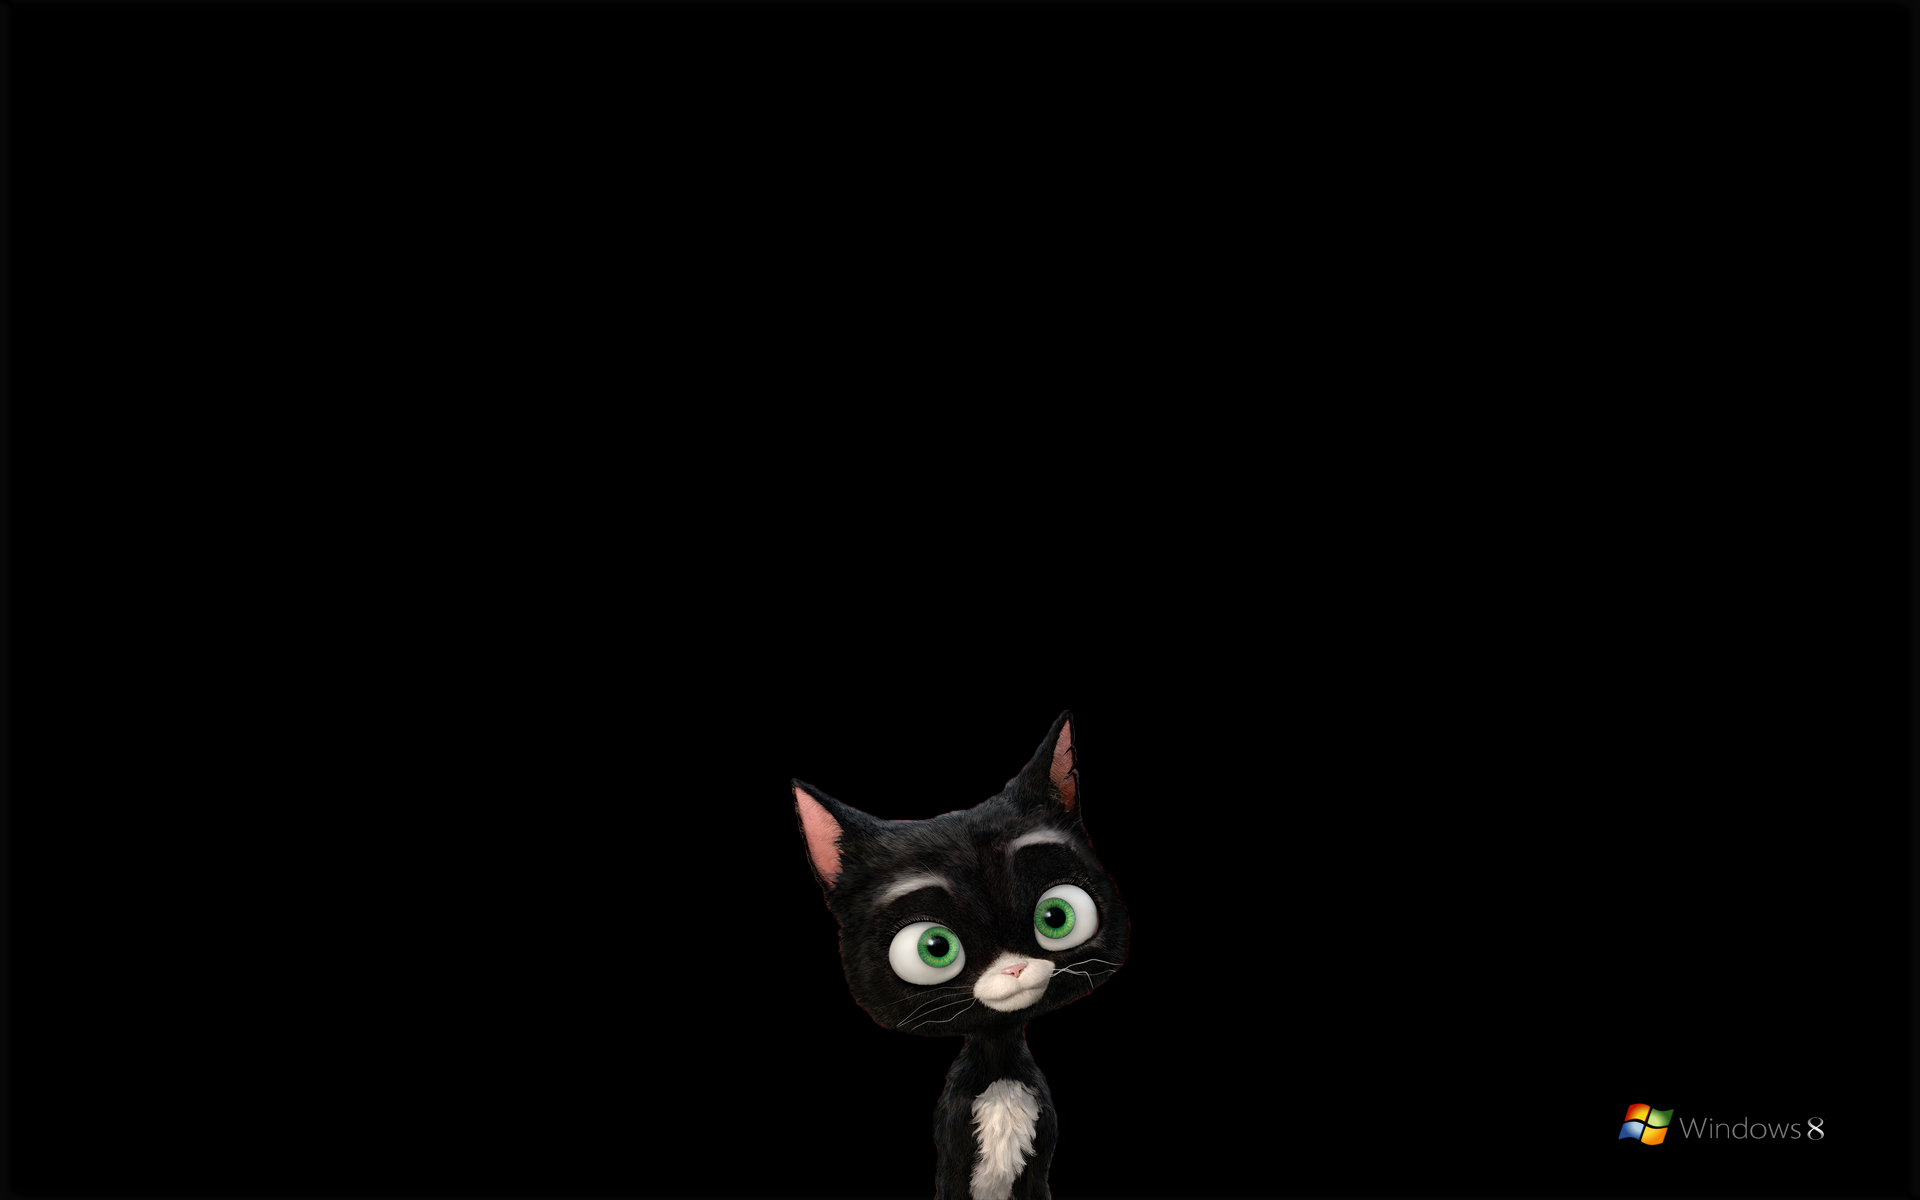 Win 8 dark Cat Wallpaper by kubines on DeviantArt